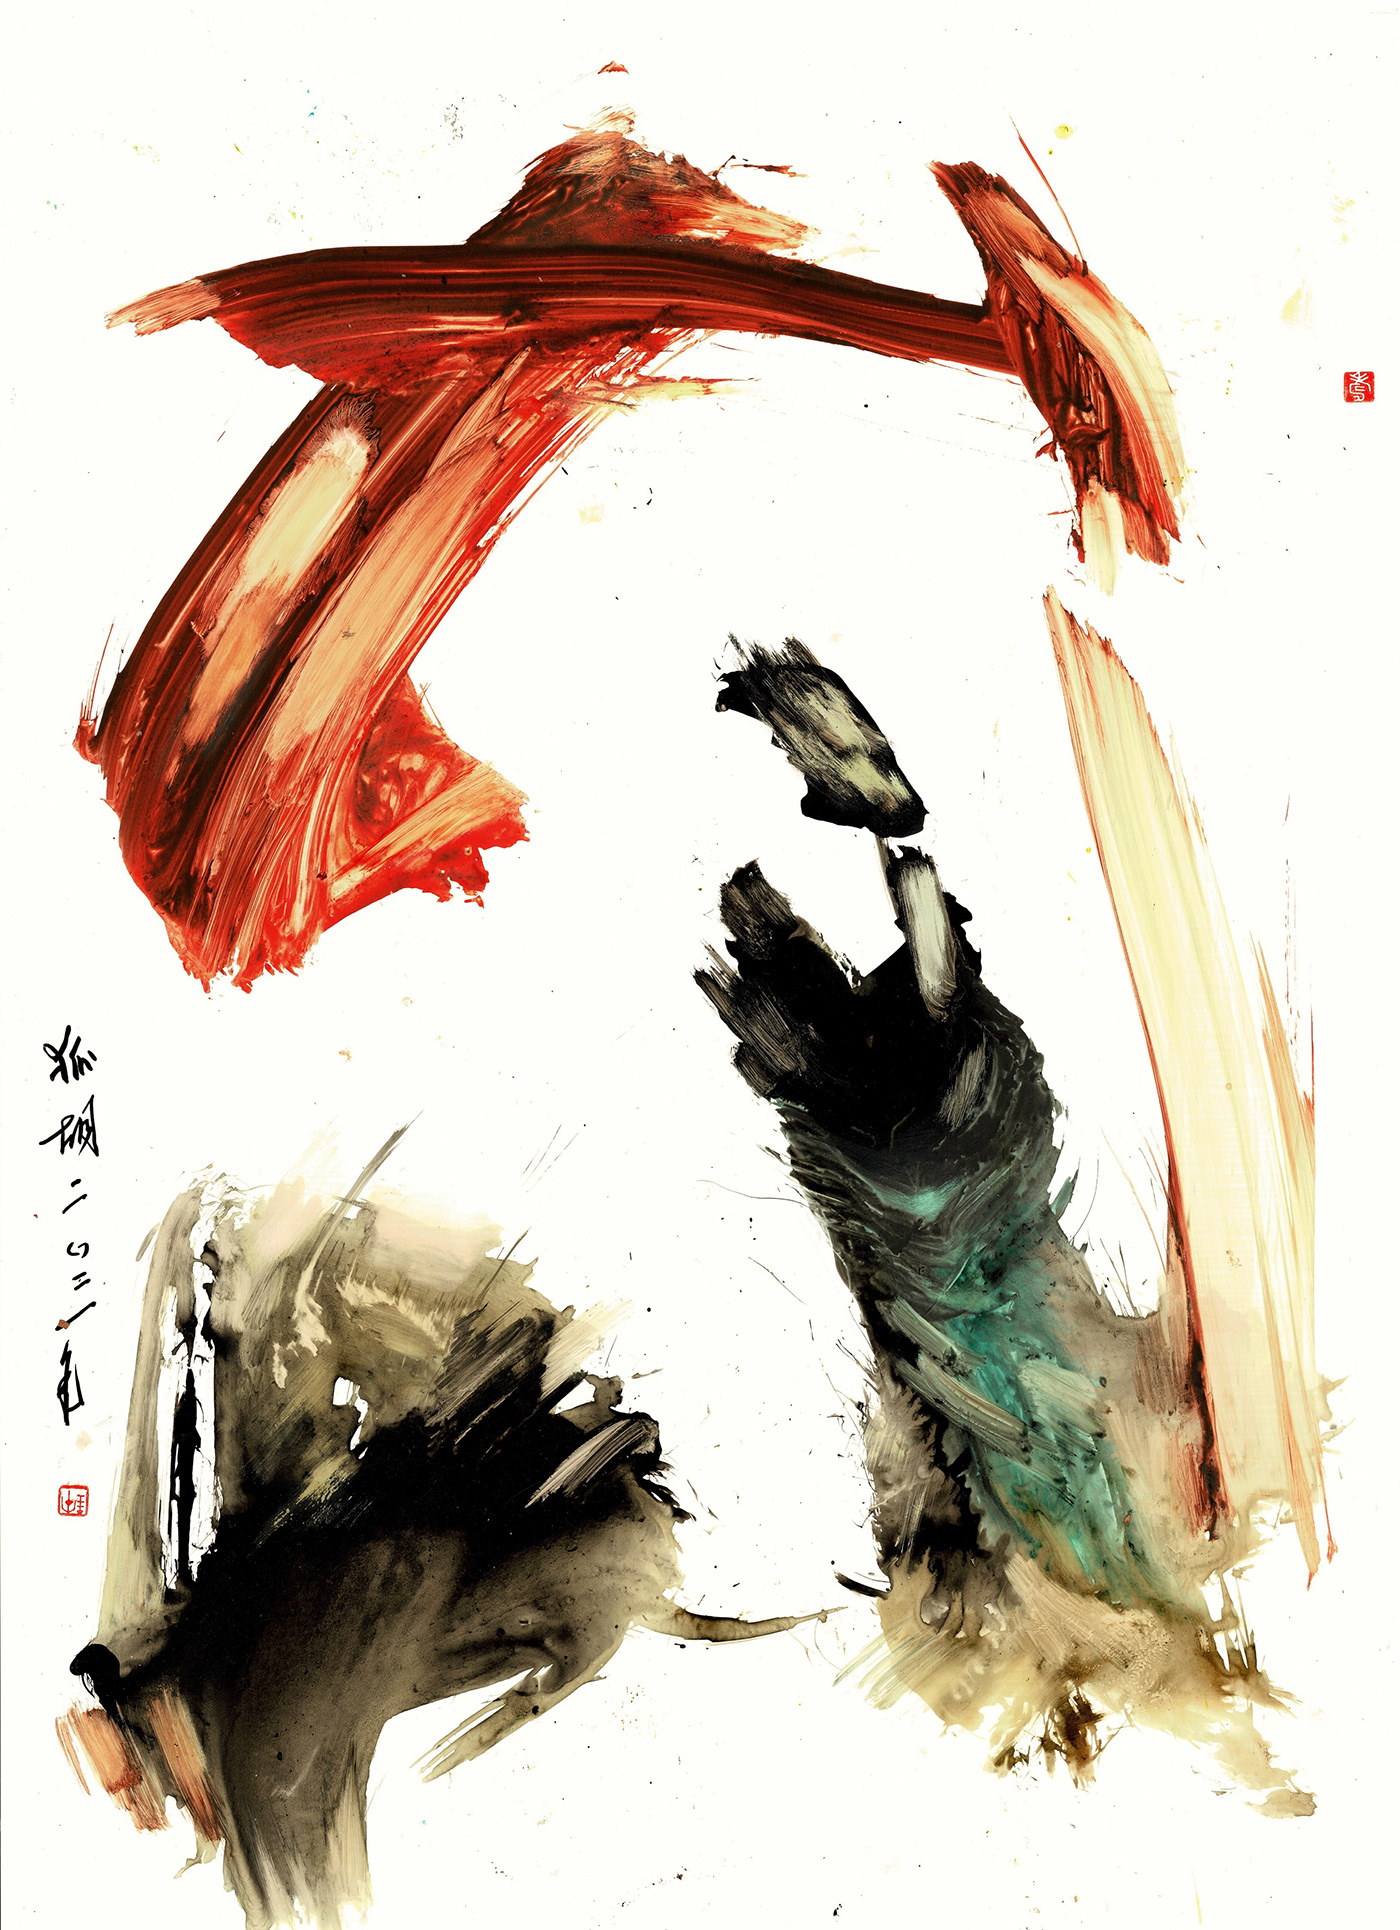 Art Brut calligraphy art chinese arts expressionism art ink wash painting sumi e art